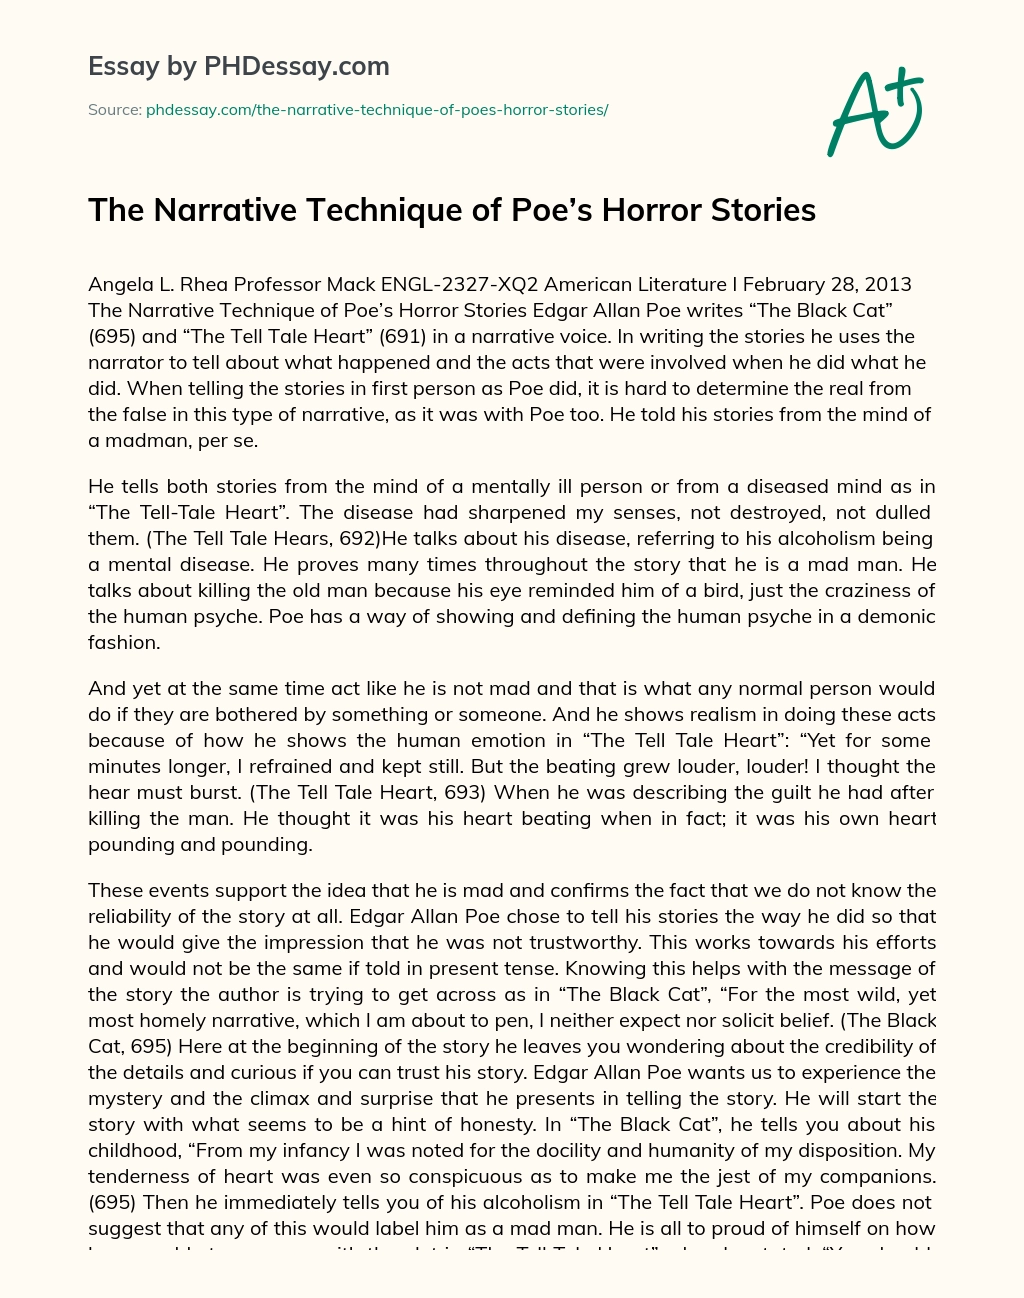 The Narrative Technique of Poe’s Horror Stories essay